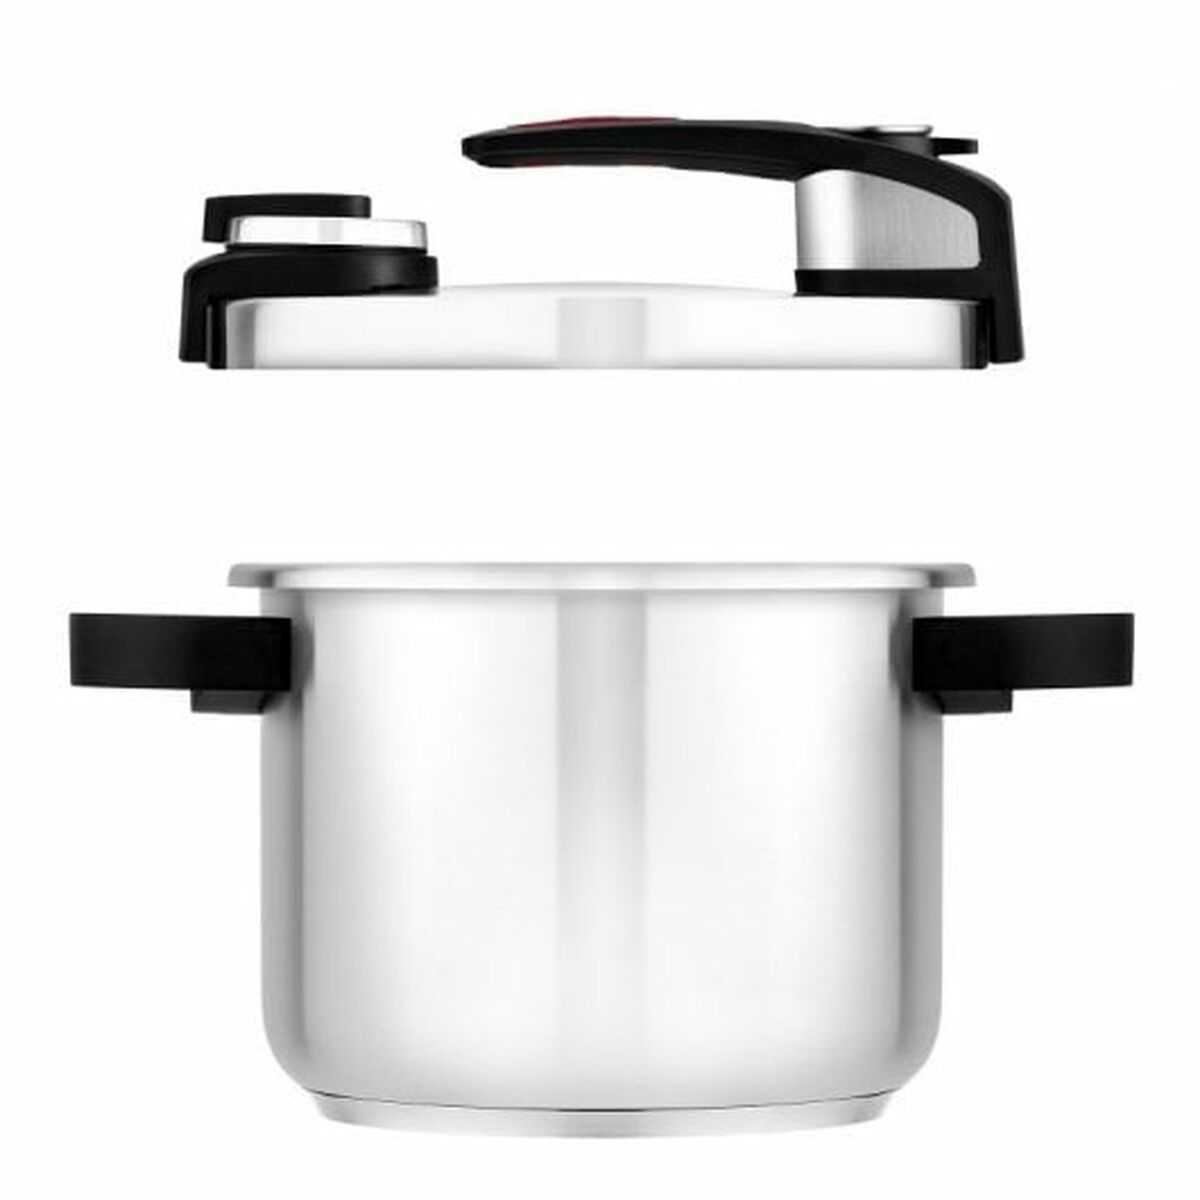 Pressure cooker BRA A185502 7 L Stainless steel Bakelite